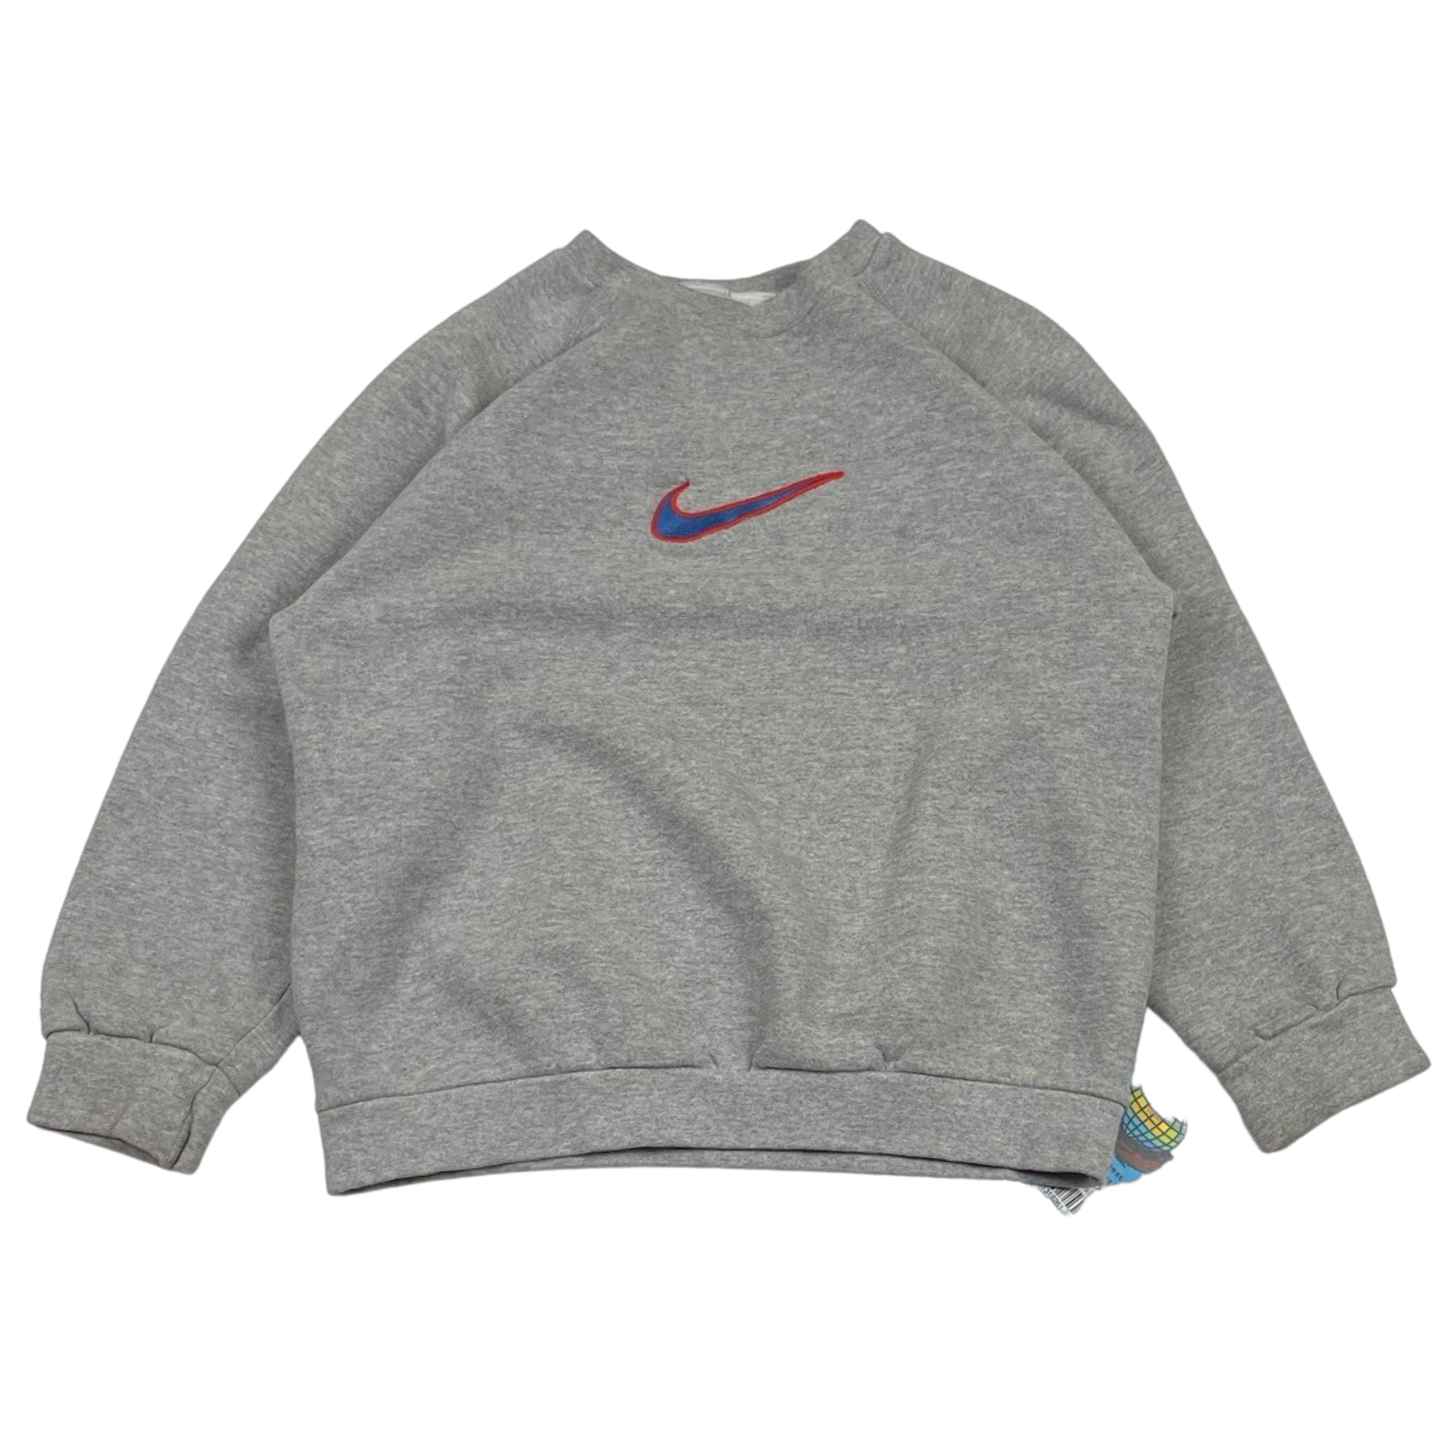 '90s Nike Embroidered Swoosh Crewneck